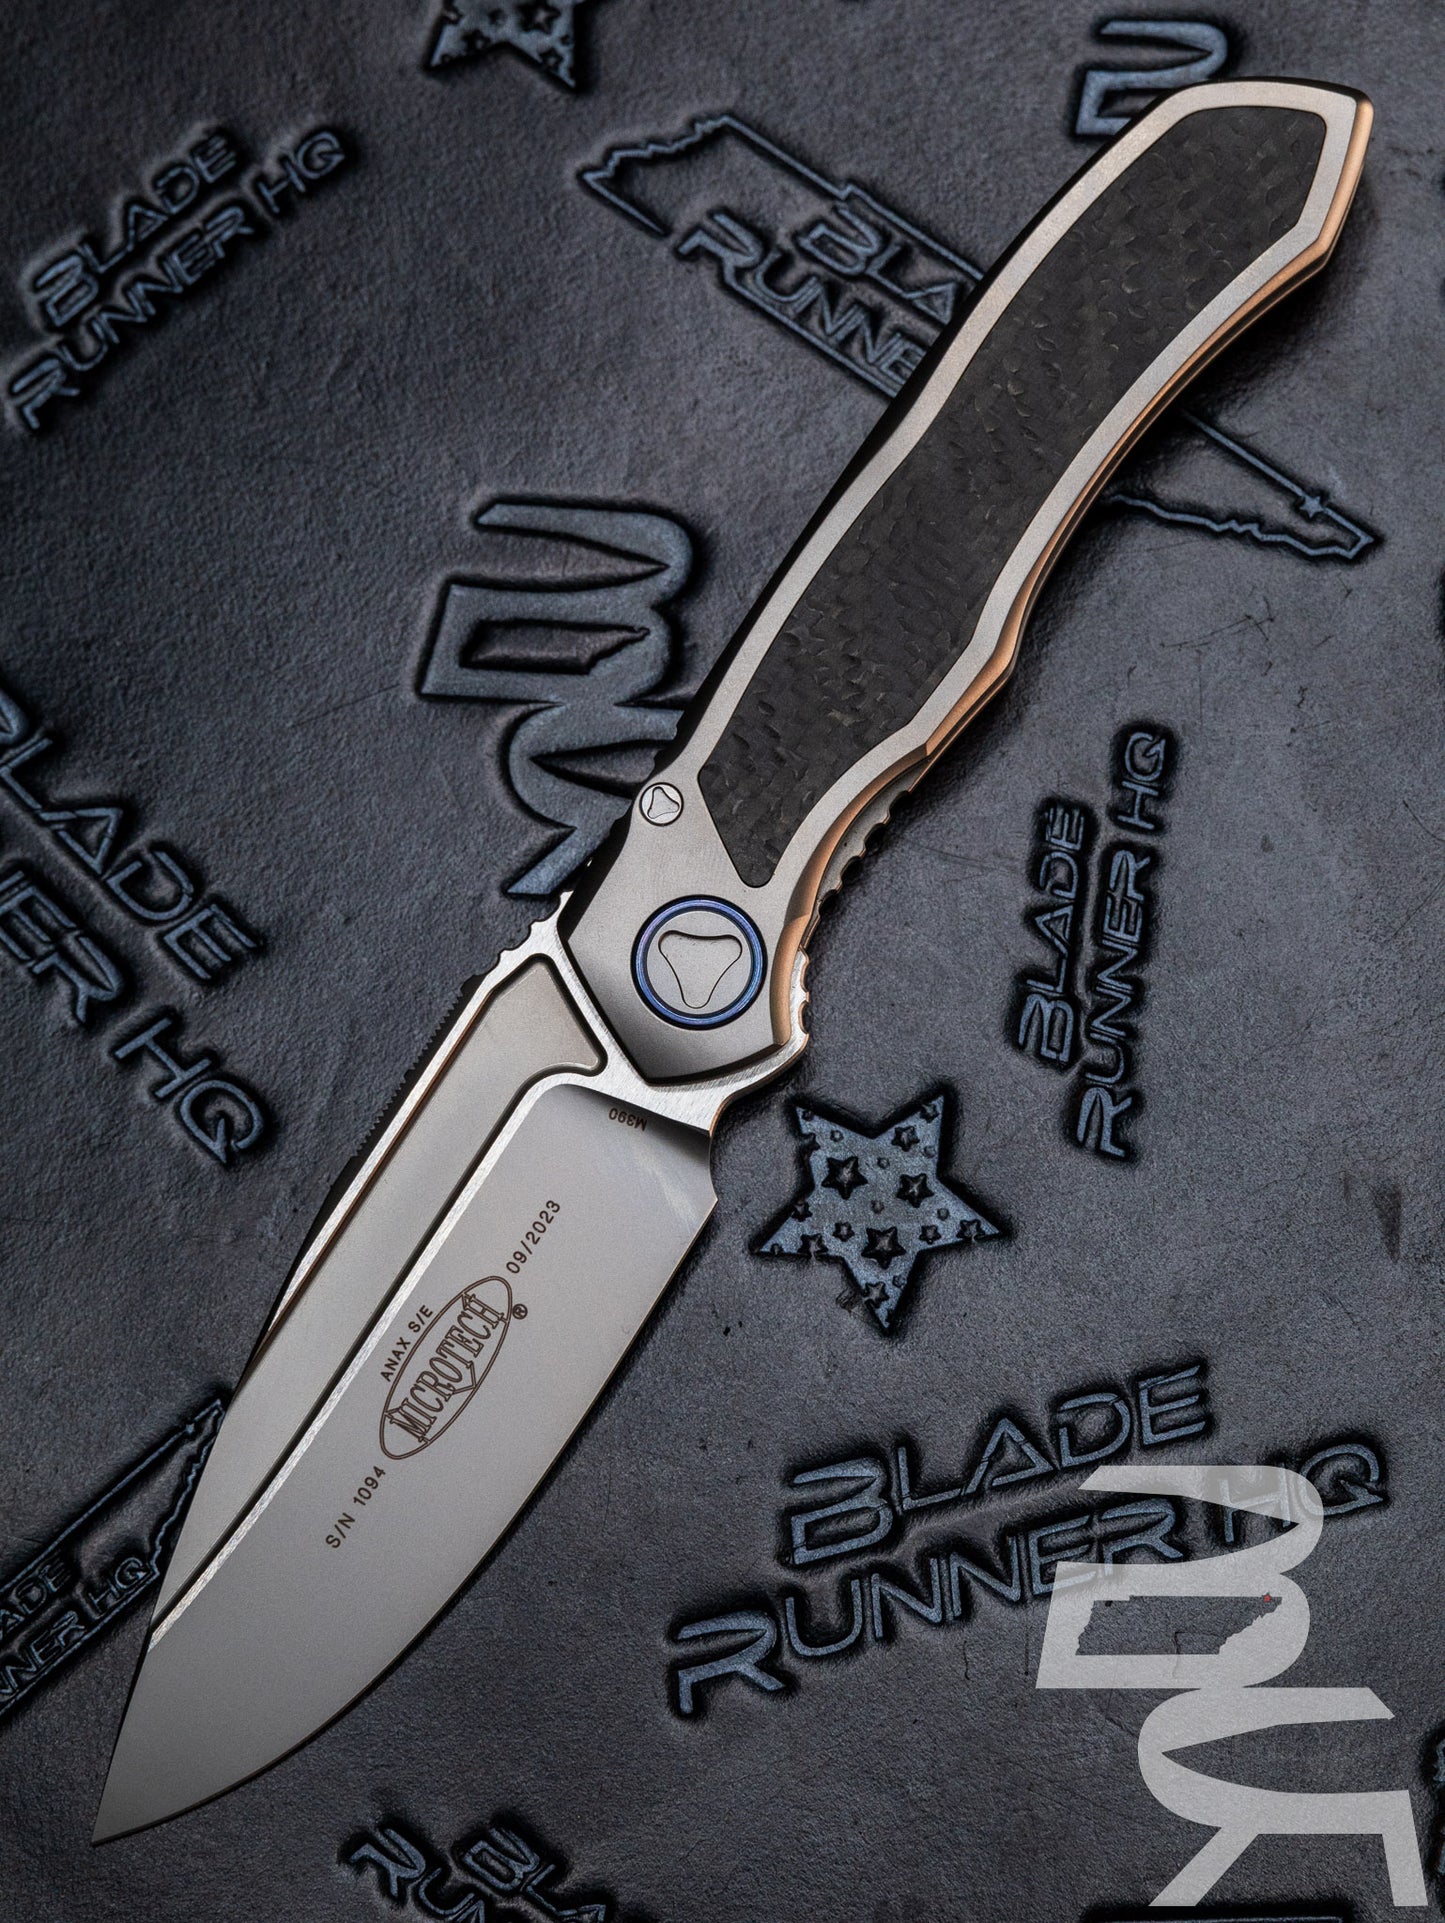 Microtech Anax Manual Folding Knife 3.7" M390 Blasted Drop Point Blade, Integral Titanium Handle with Carbon Fiber Inlay - 190C-7CFITI